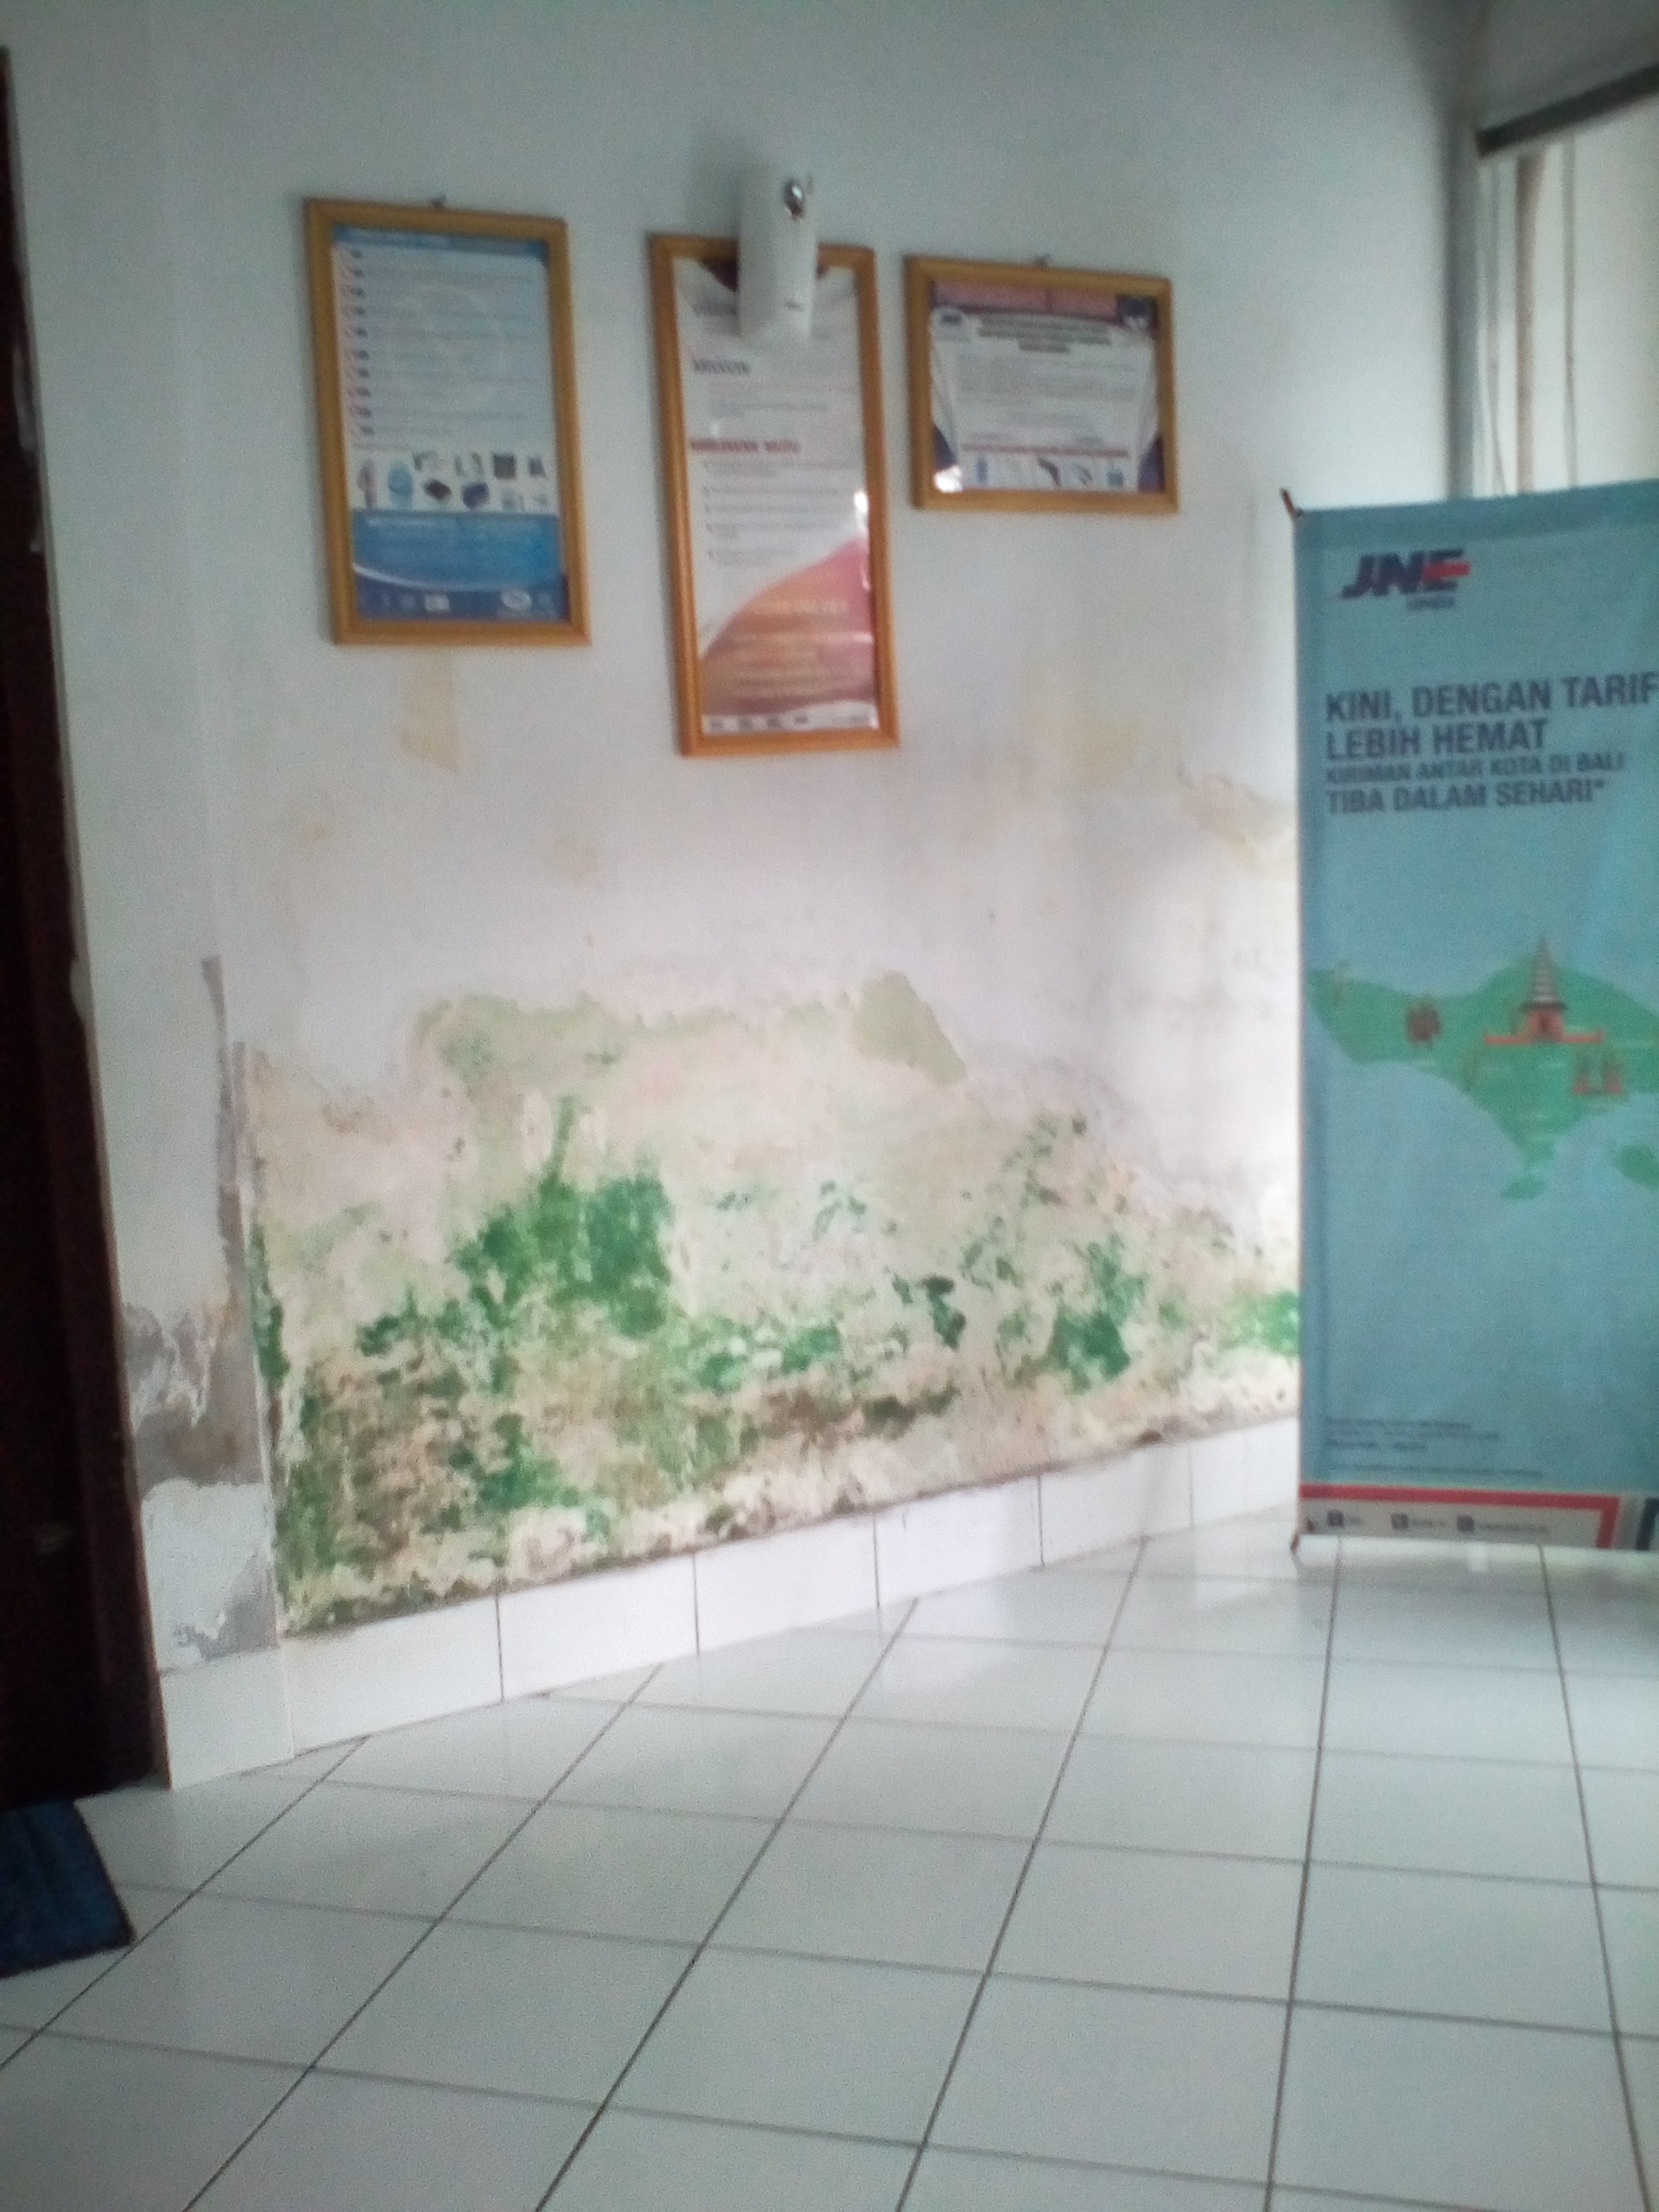  Dinding Kantor  JNE Tabanan Bali Berjamur Media Konsumen